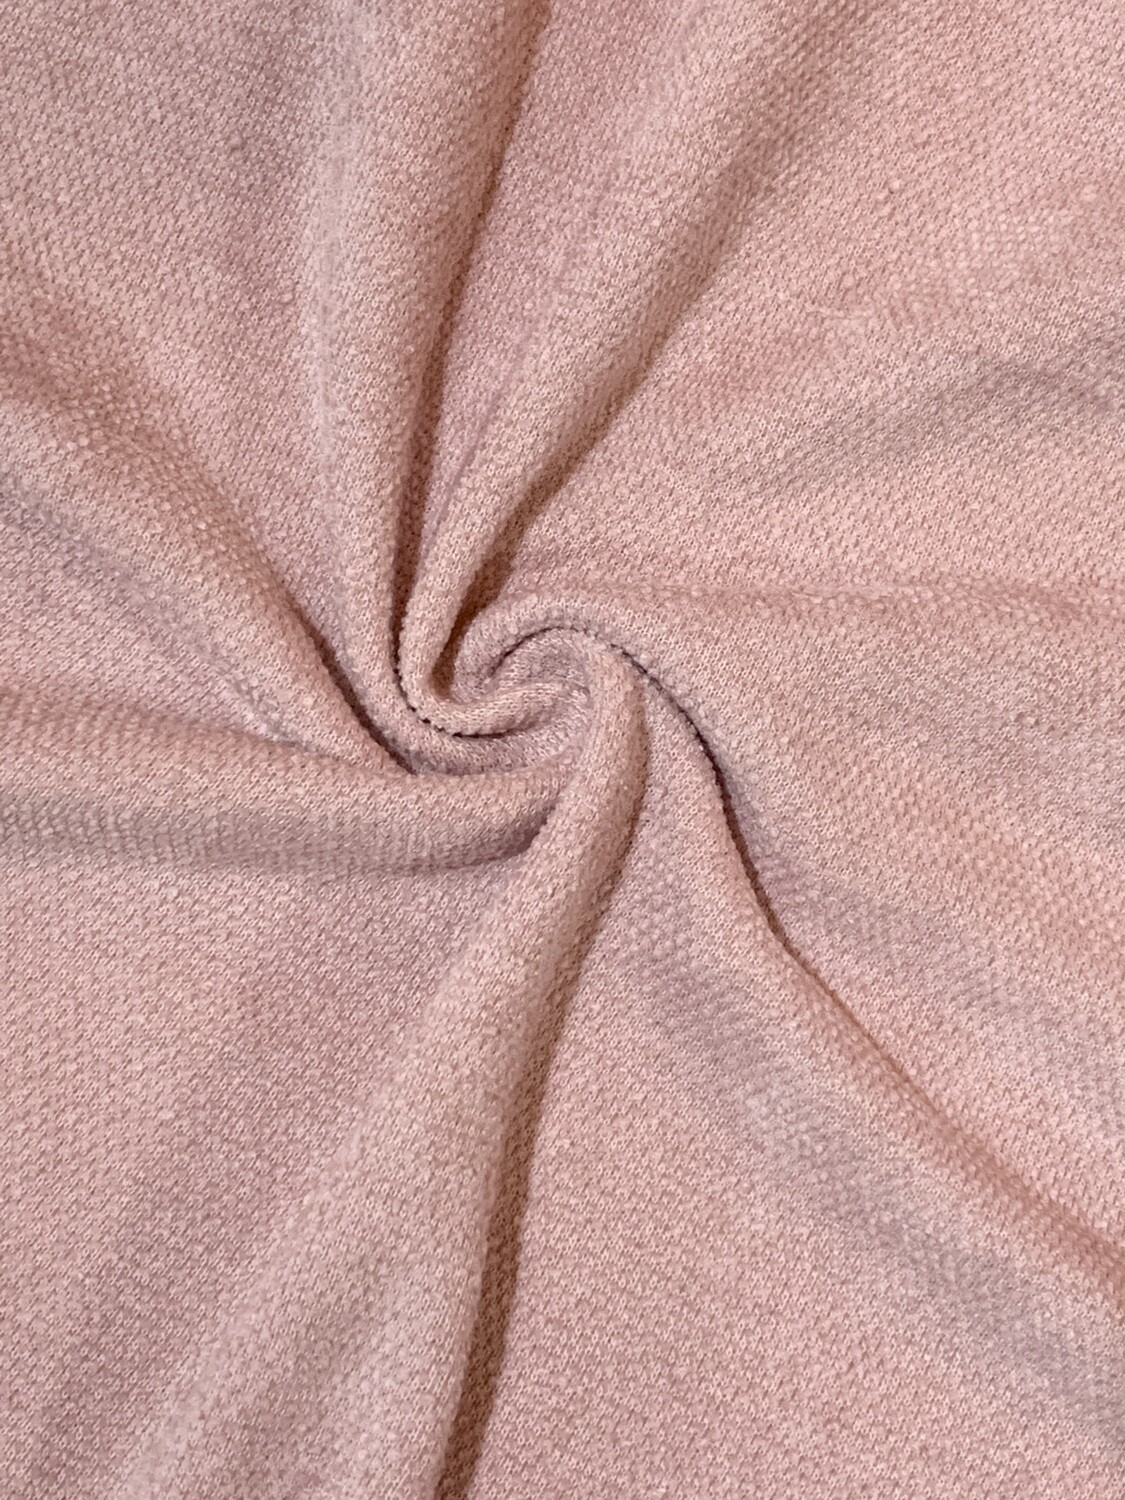 Light Rose | Chenille Fabric Plush Sweater Knit | 170cm Wide